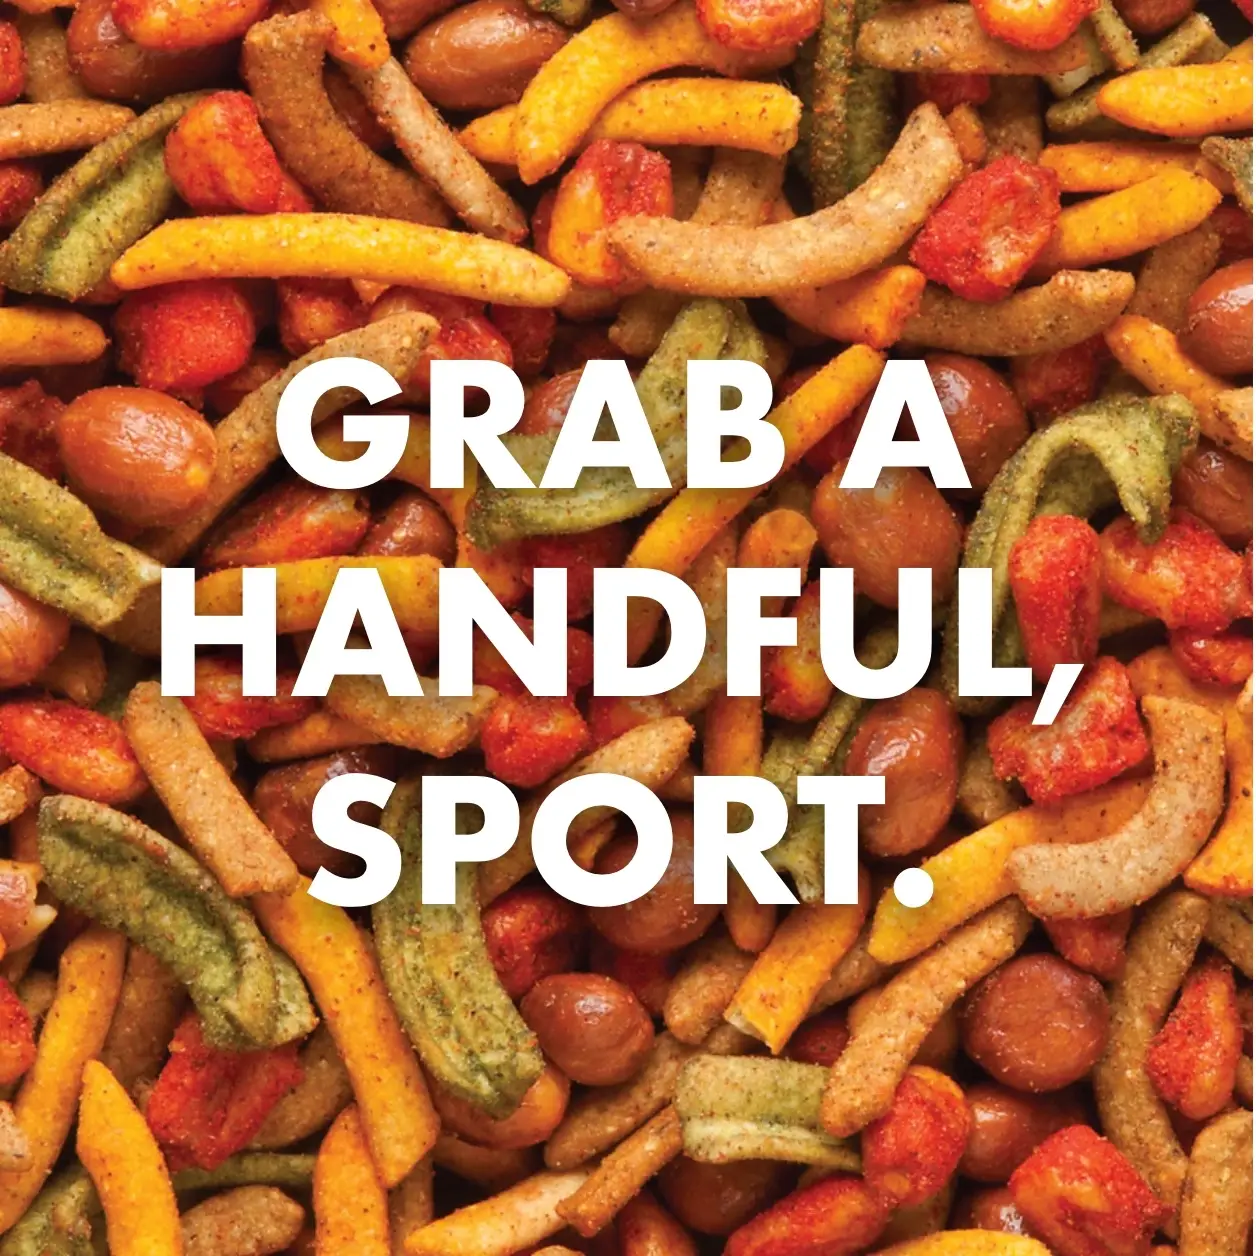 Grab a handful of sport.